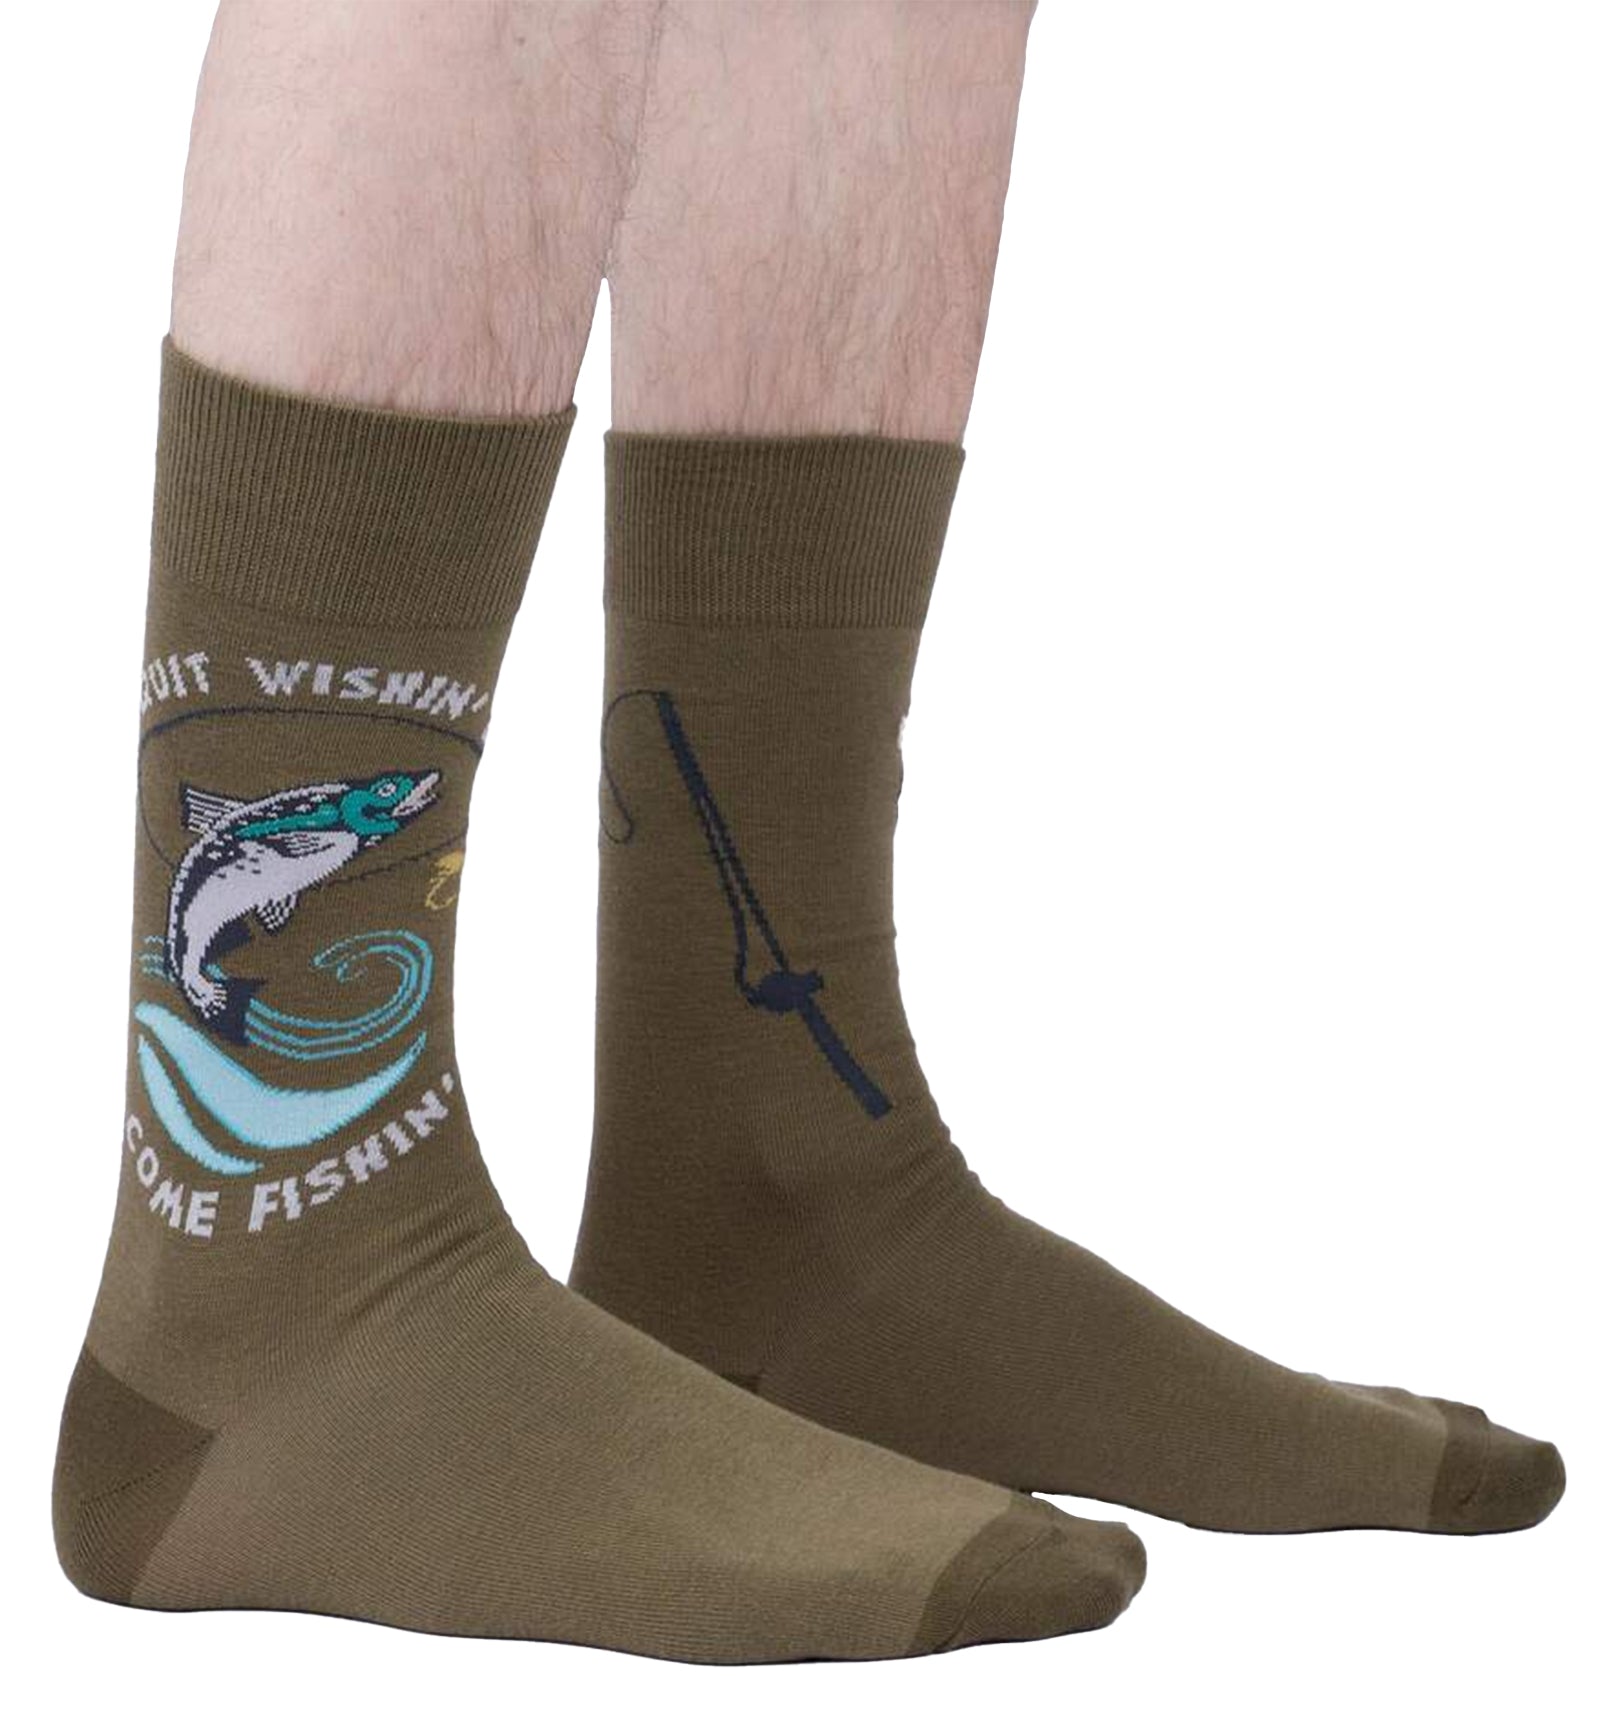 SOCK it to me Men's Crew Socks (MEF0585),Quit Wishin' & Come Fishin' - Quit Wishin' & Come Fishin',One Size